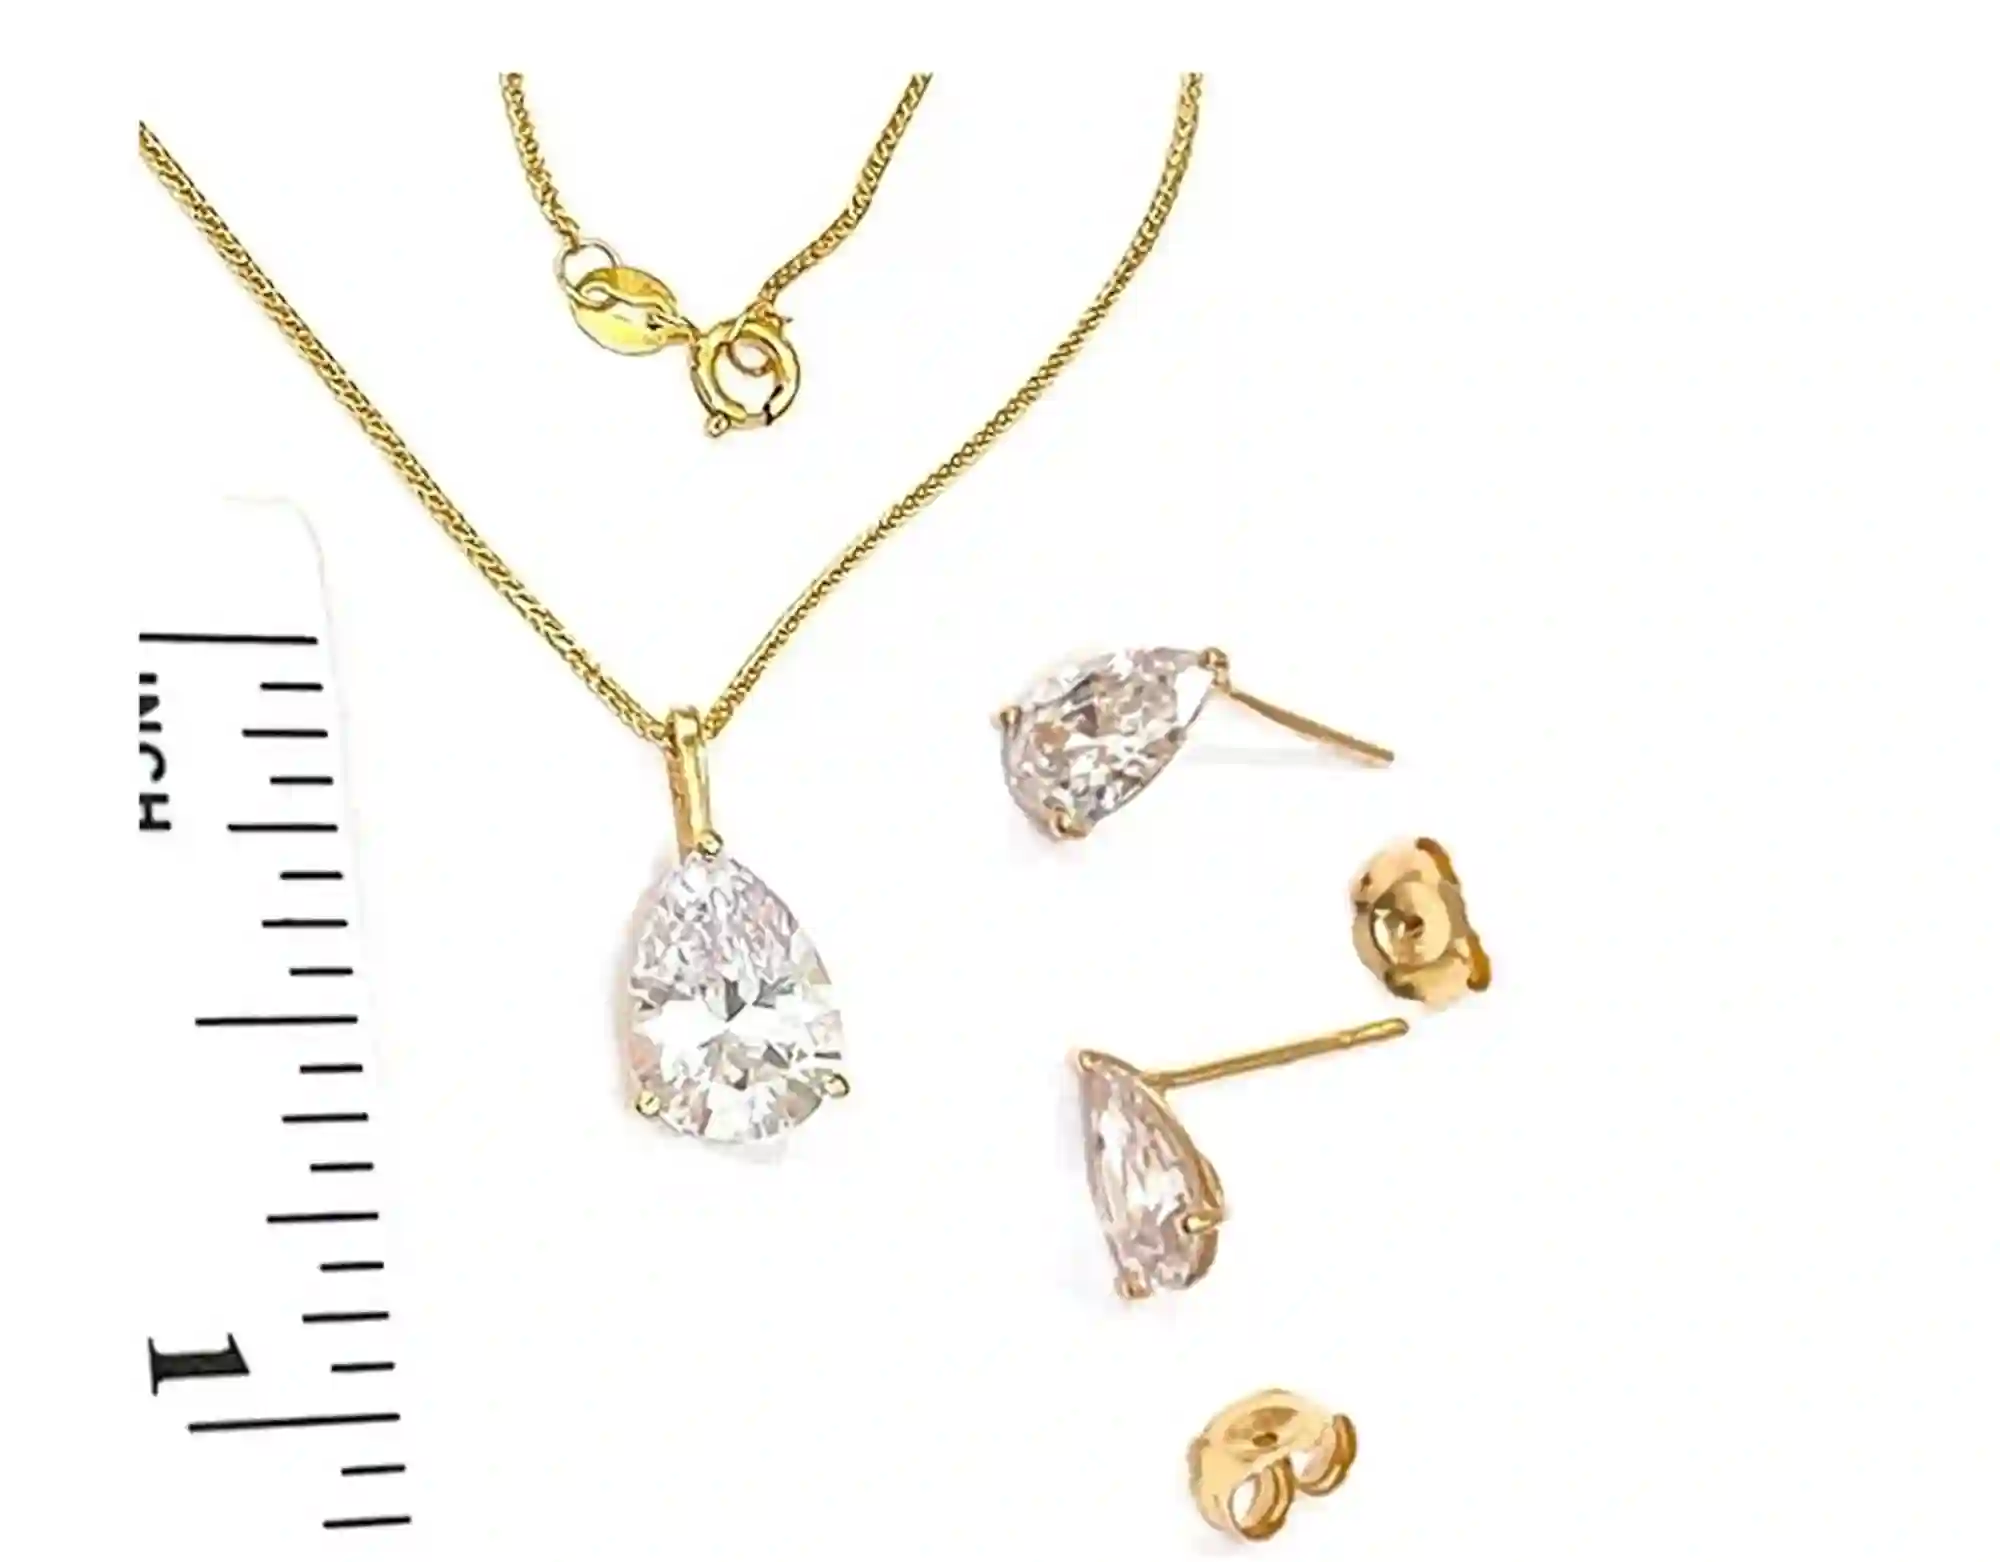 3ctw Diamond Tear Drop Pendant Diamond Teardrop Earrings Solid 18k GOLD Diamond Jewelry SET Pear Diamond Wedding Anniversary Gift for her 